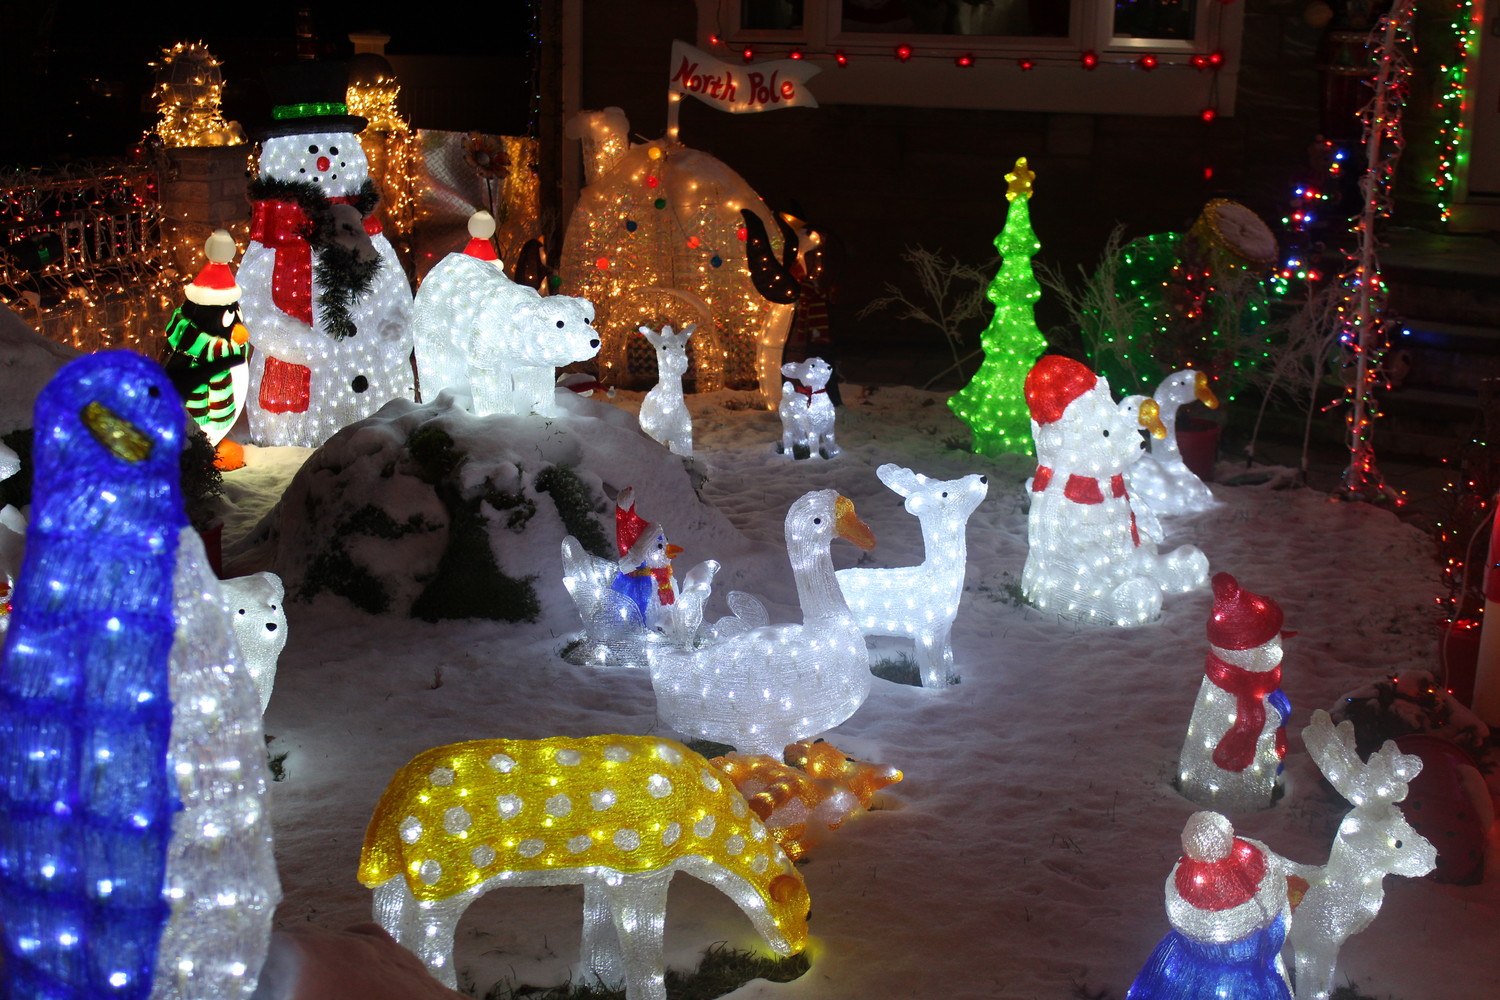 JoSé Perez’s house has light-up animals, all facing the nativity scene.